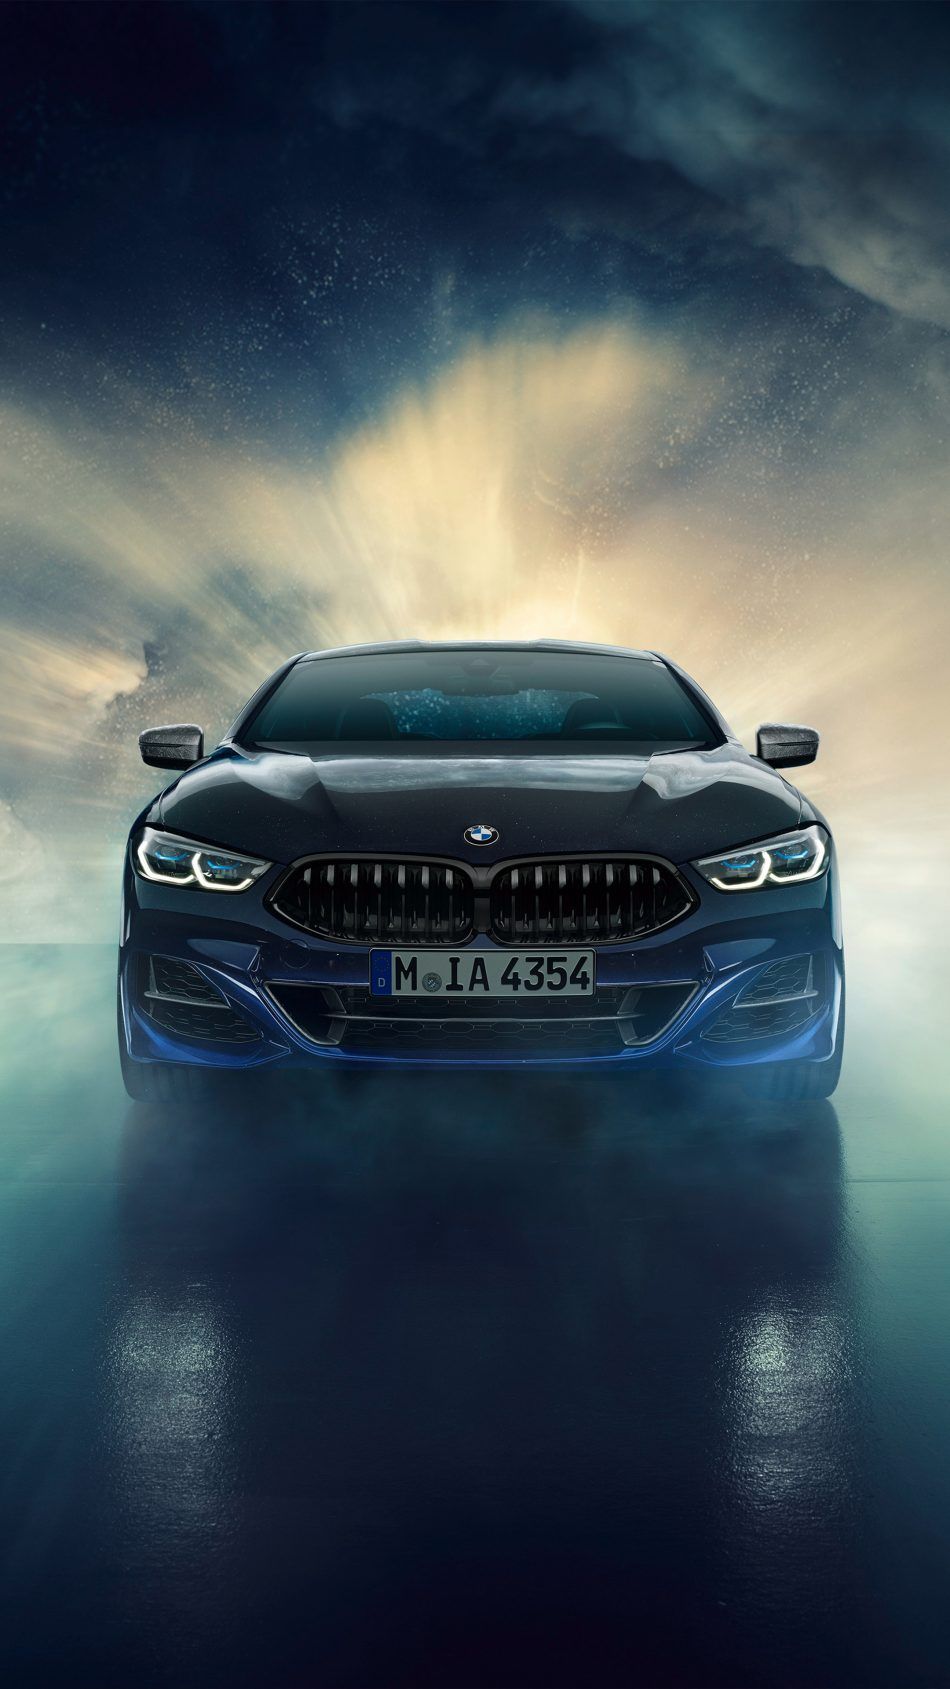 BMW Individual M850i Xdrive Night Sky 4K Ultra HD Mobile Wallpaper. Bmw wallpaper, Bmw, Bmw cars